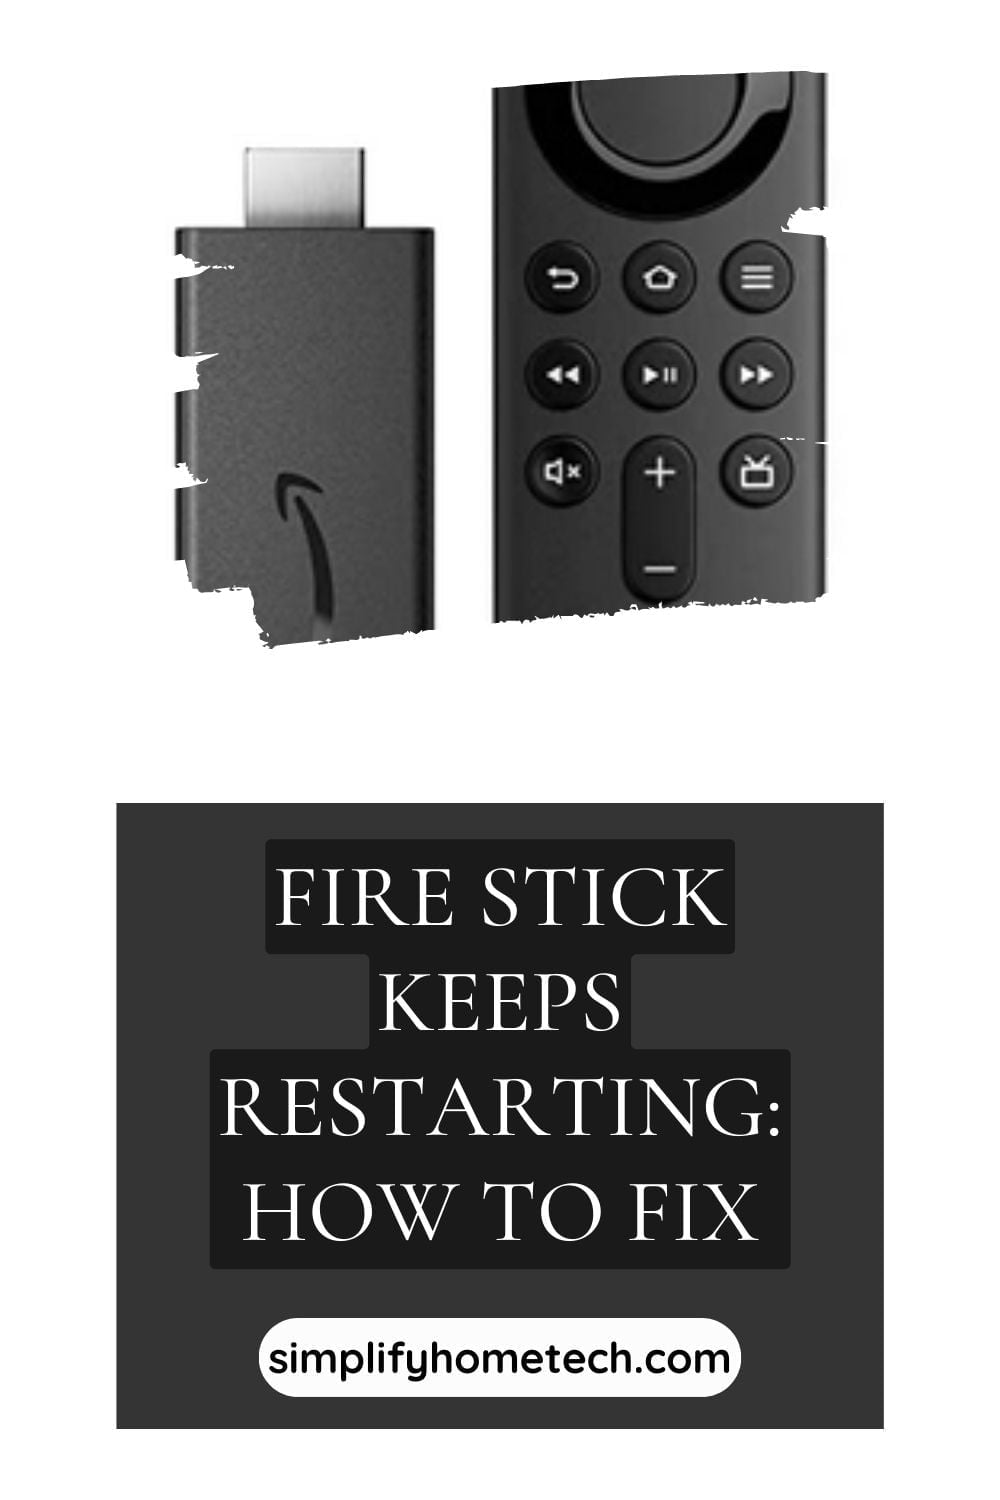 Fire Stick Keeps Restarting: How to Fix